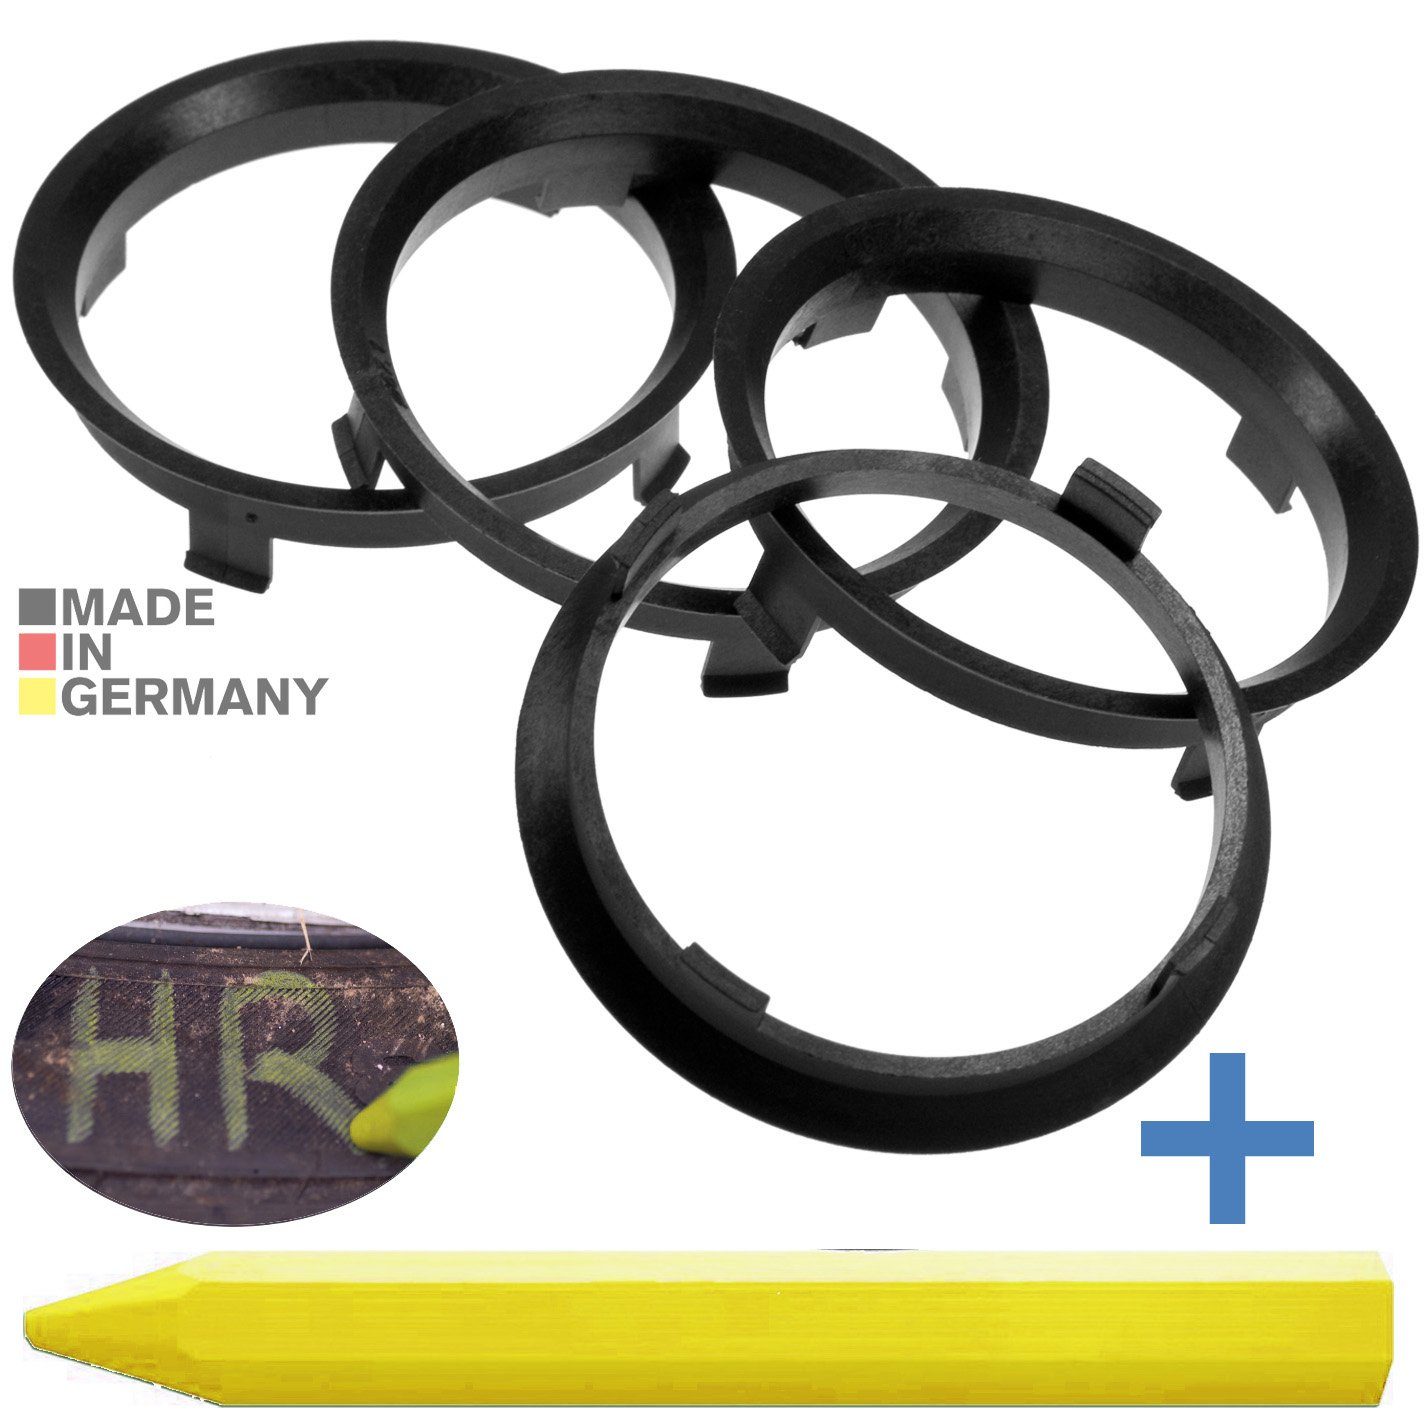 RKC Reifenstift 4X Zentrierringe Schwarz Felgen Ringe + 1x Reifen Kreide Fett Stift, Maße: 71,6 x 67,1 mm